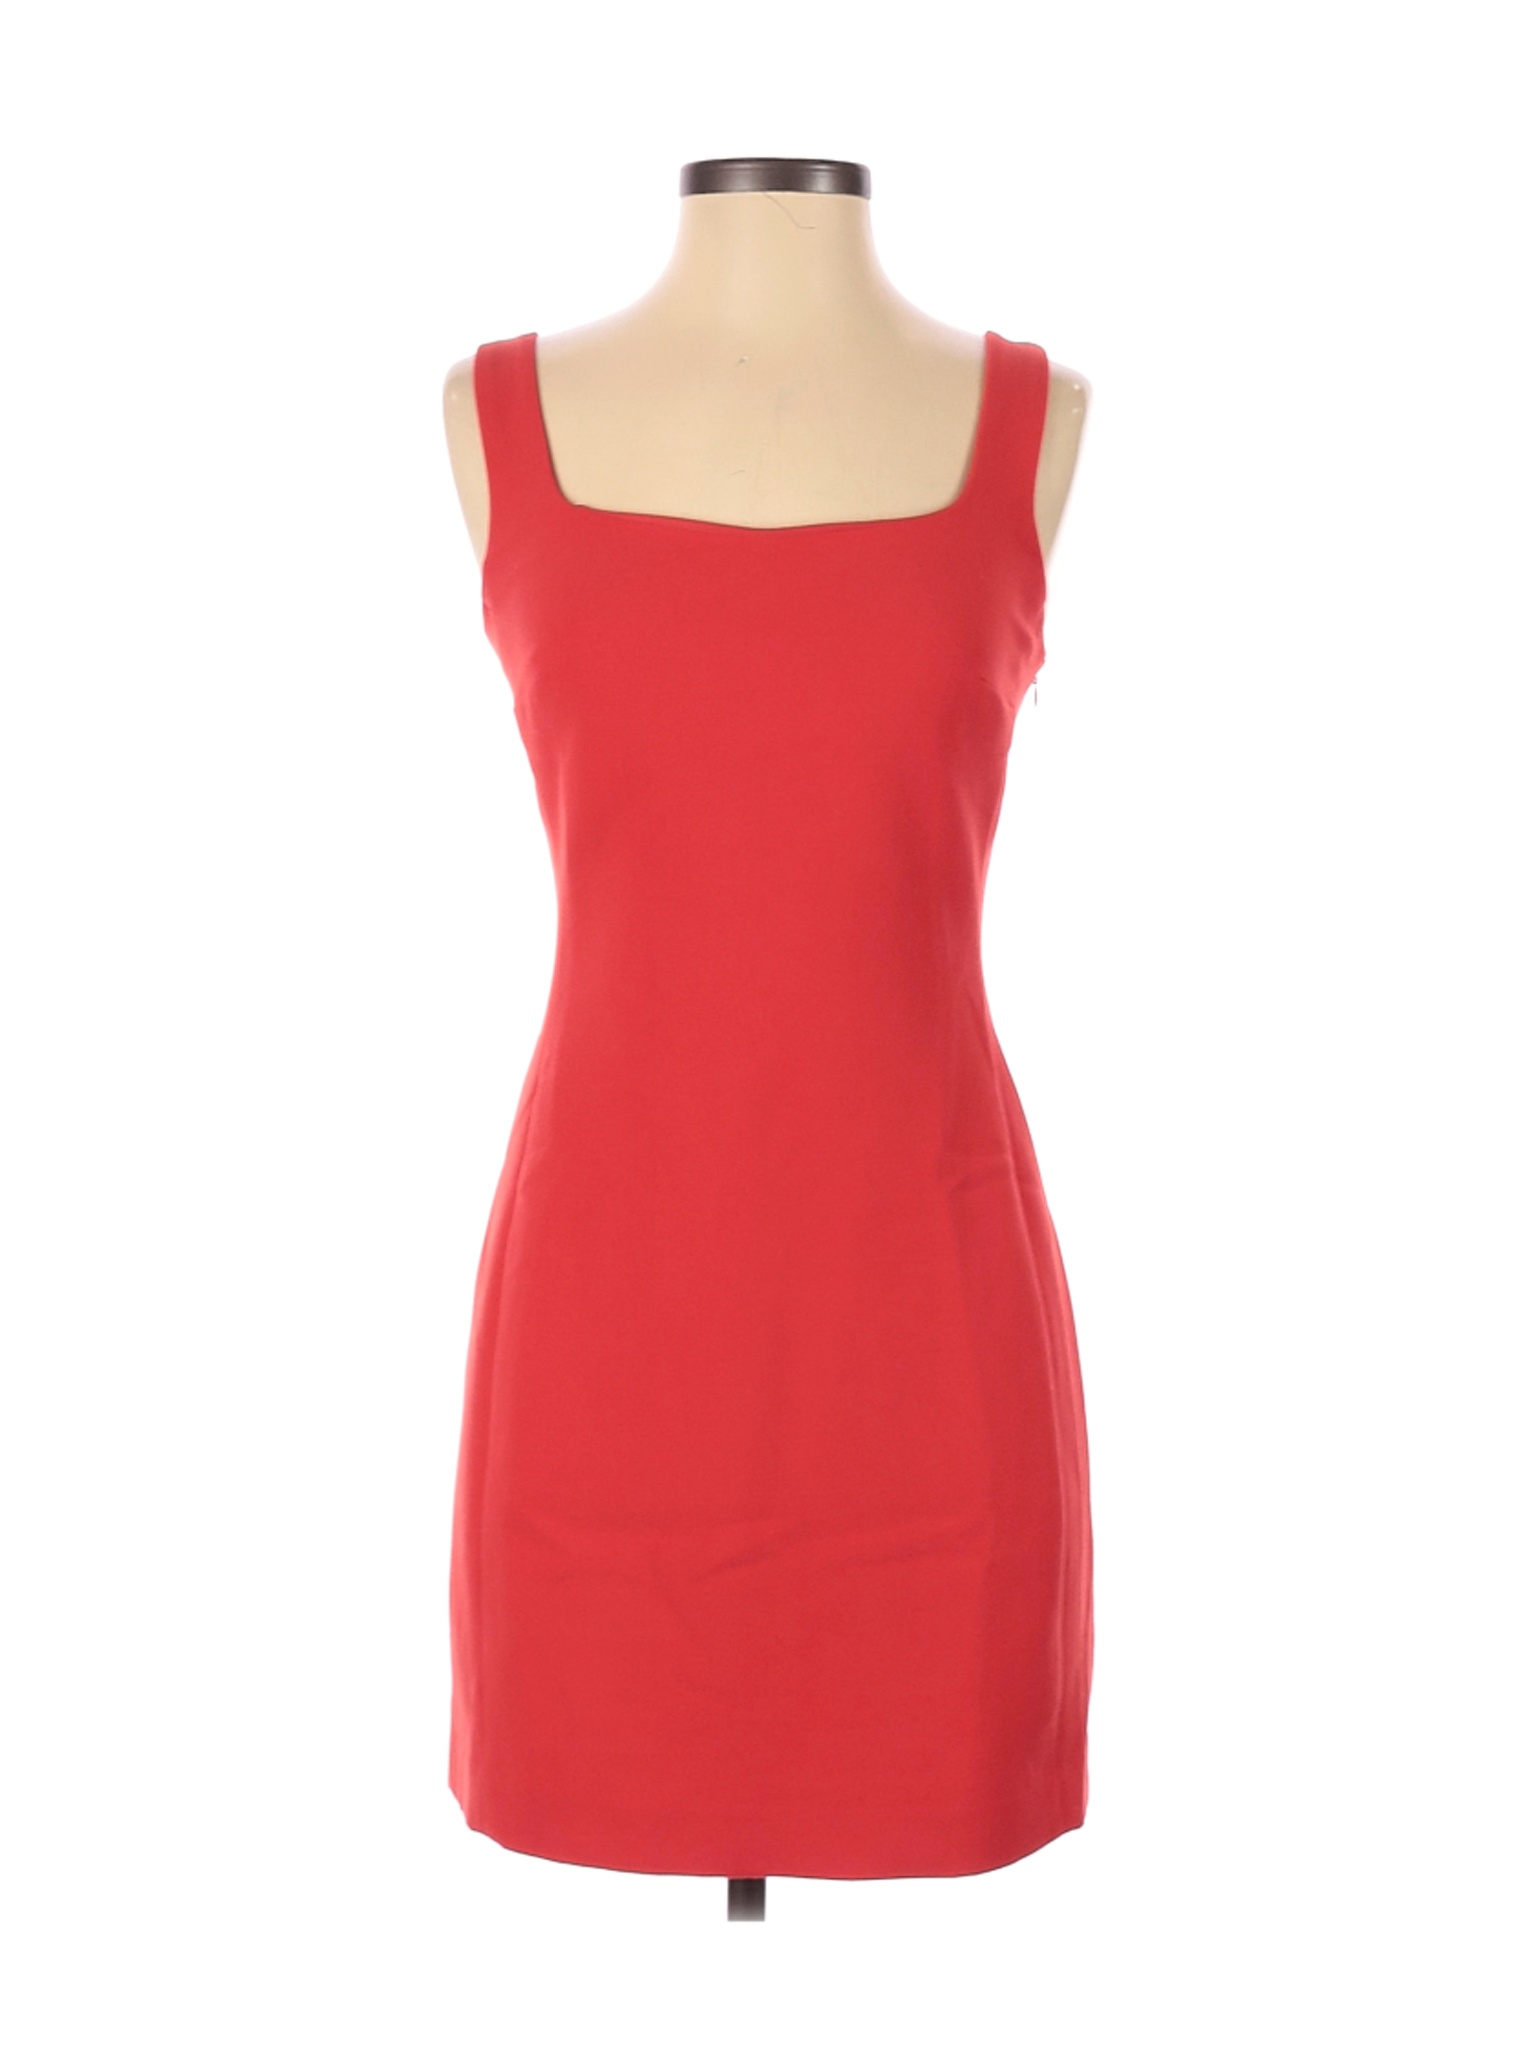 Armani Exchange Women Red Casual Dress 4 | eBay